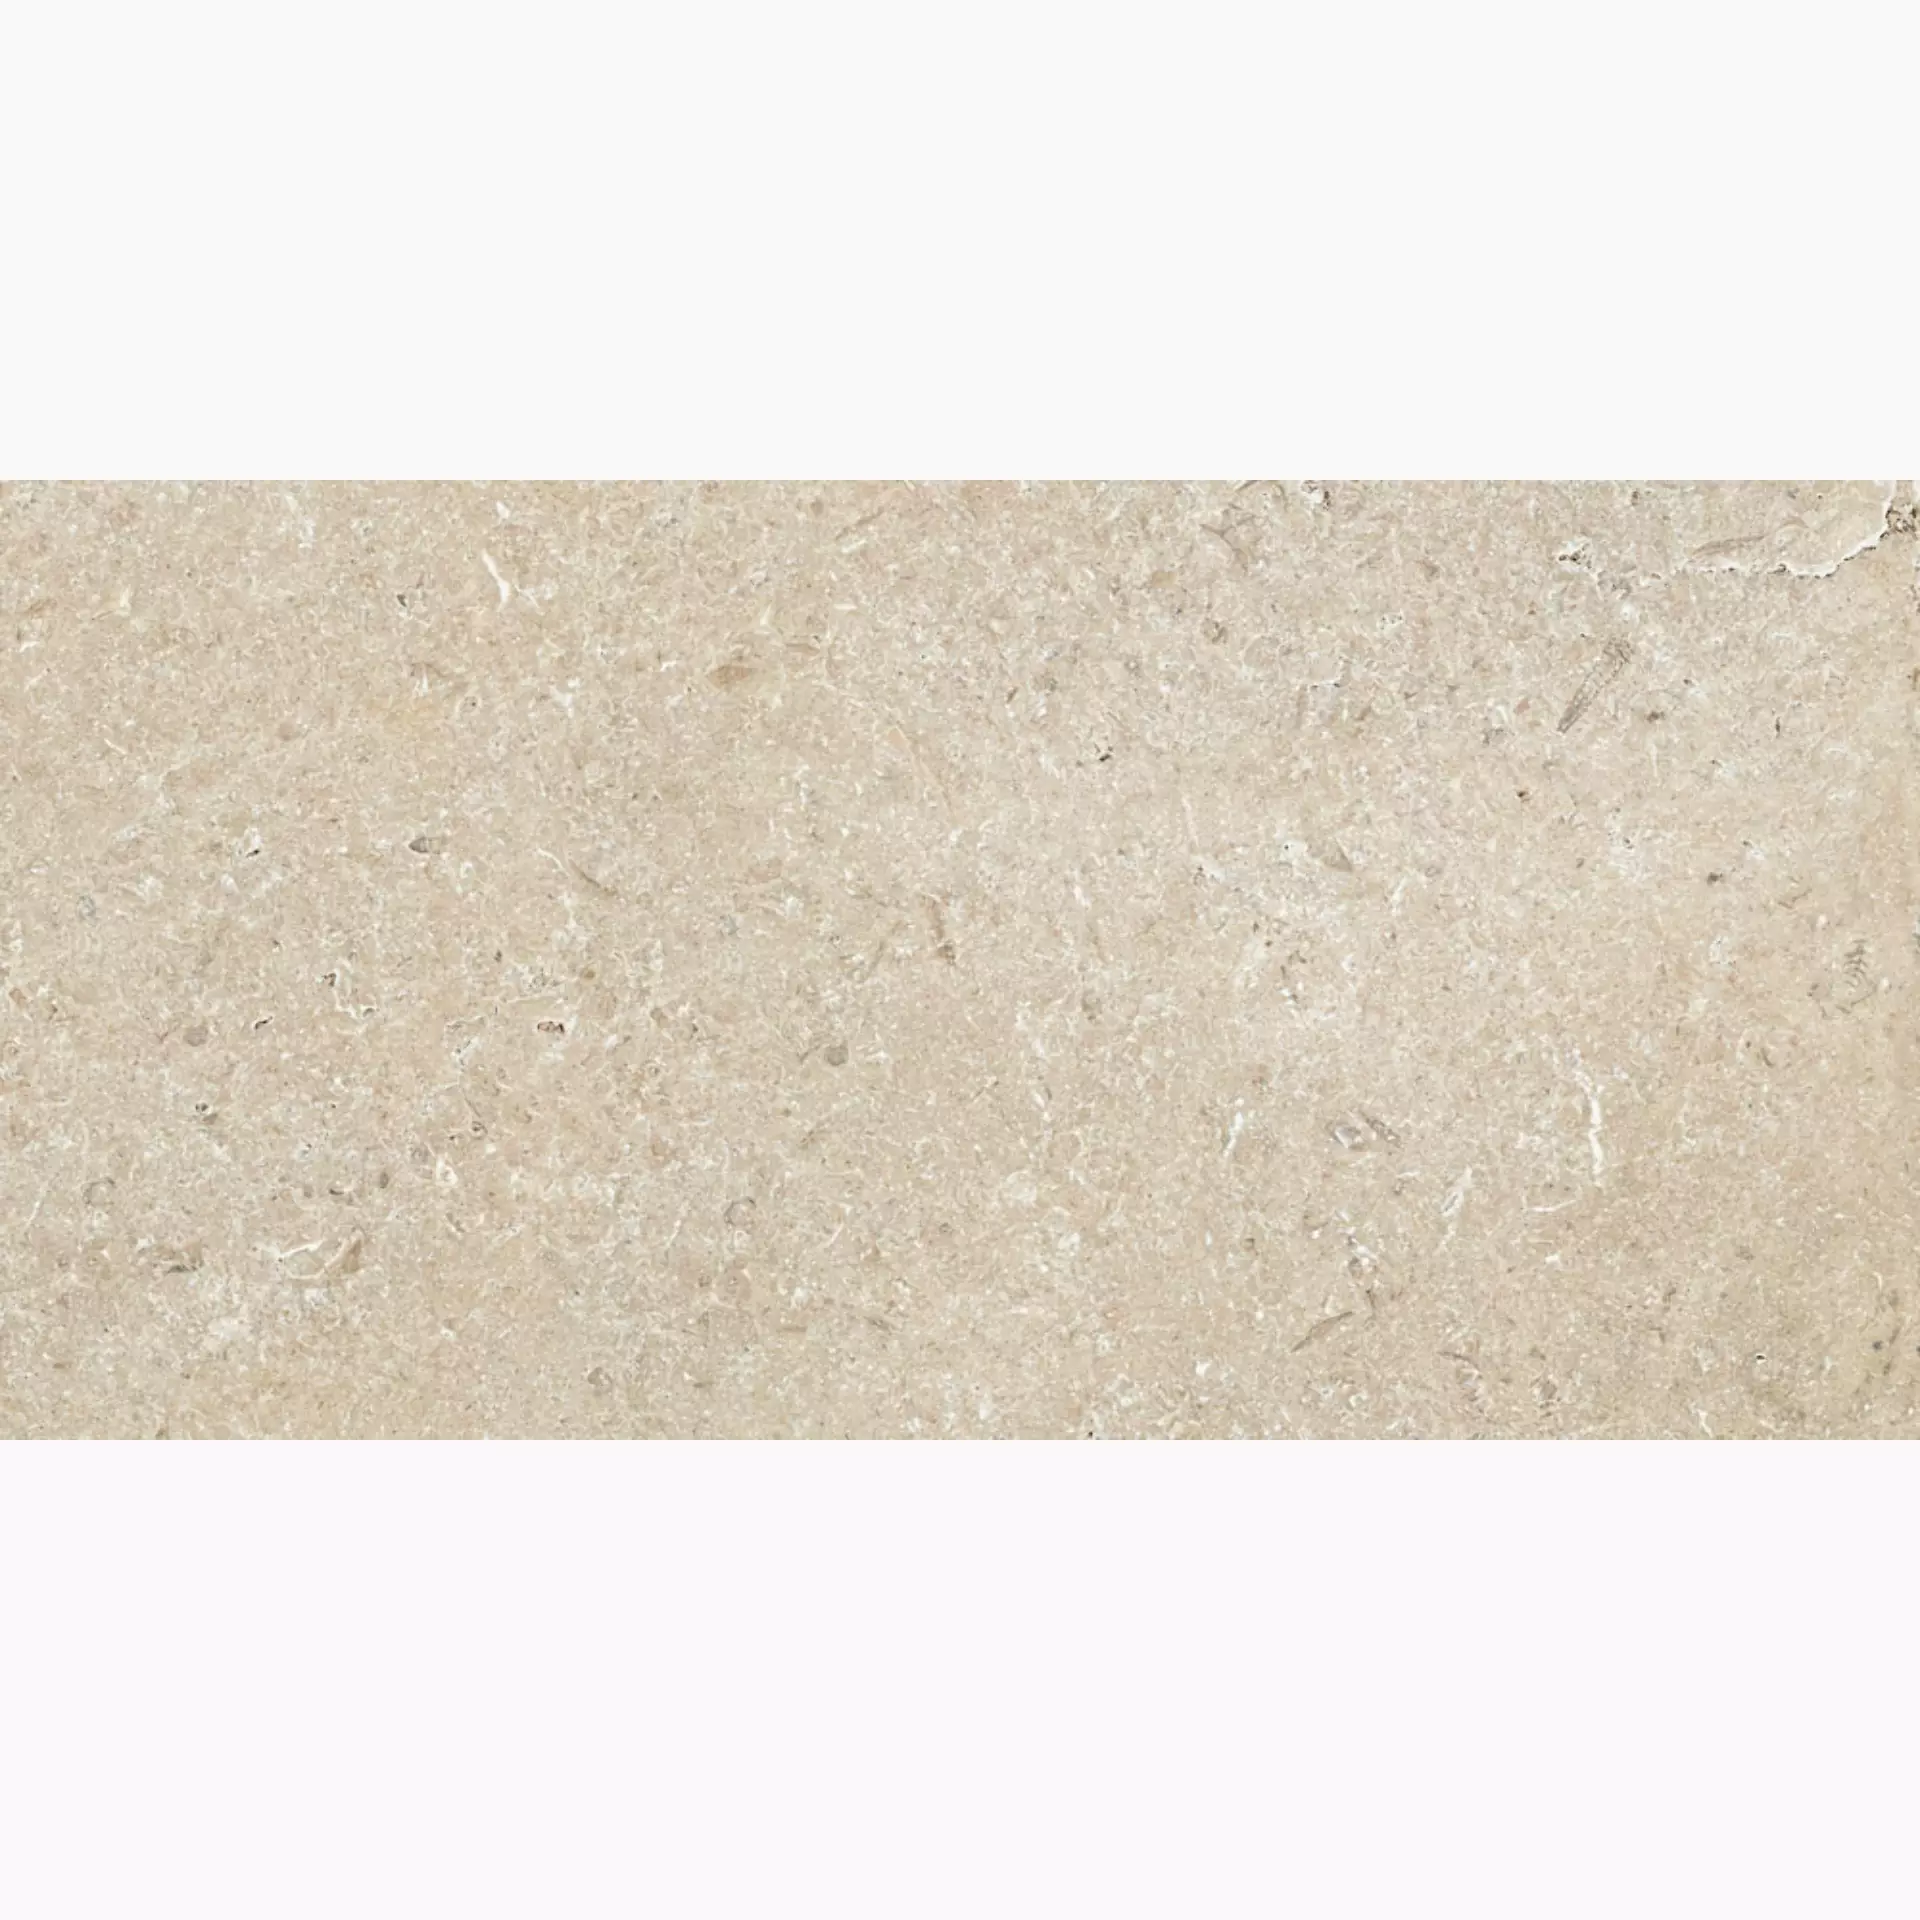 Cottodeste Secret Stone Precious Beige Honed Protect EG-SSX1 30x60cm rectified 14mm